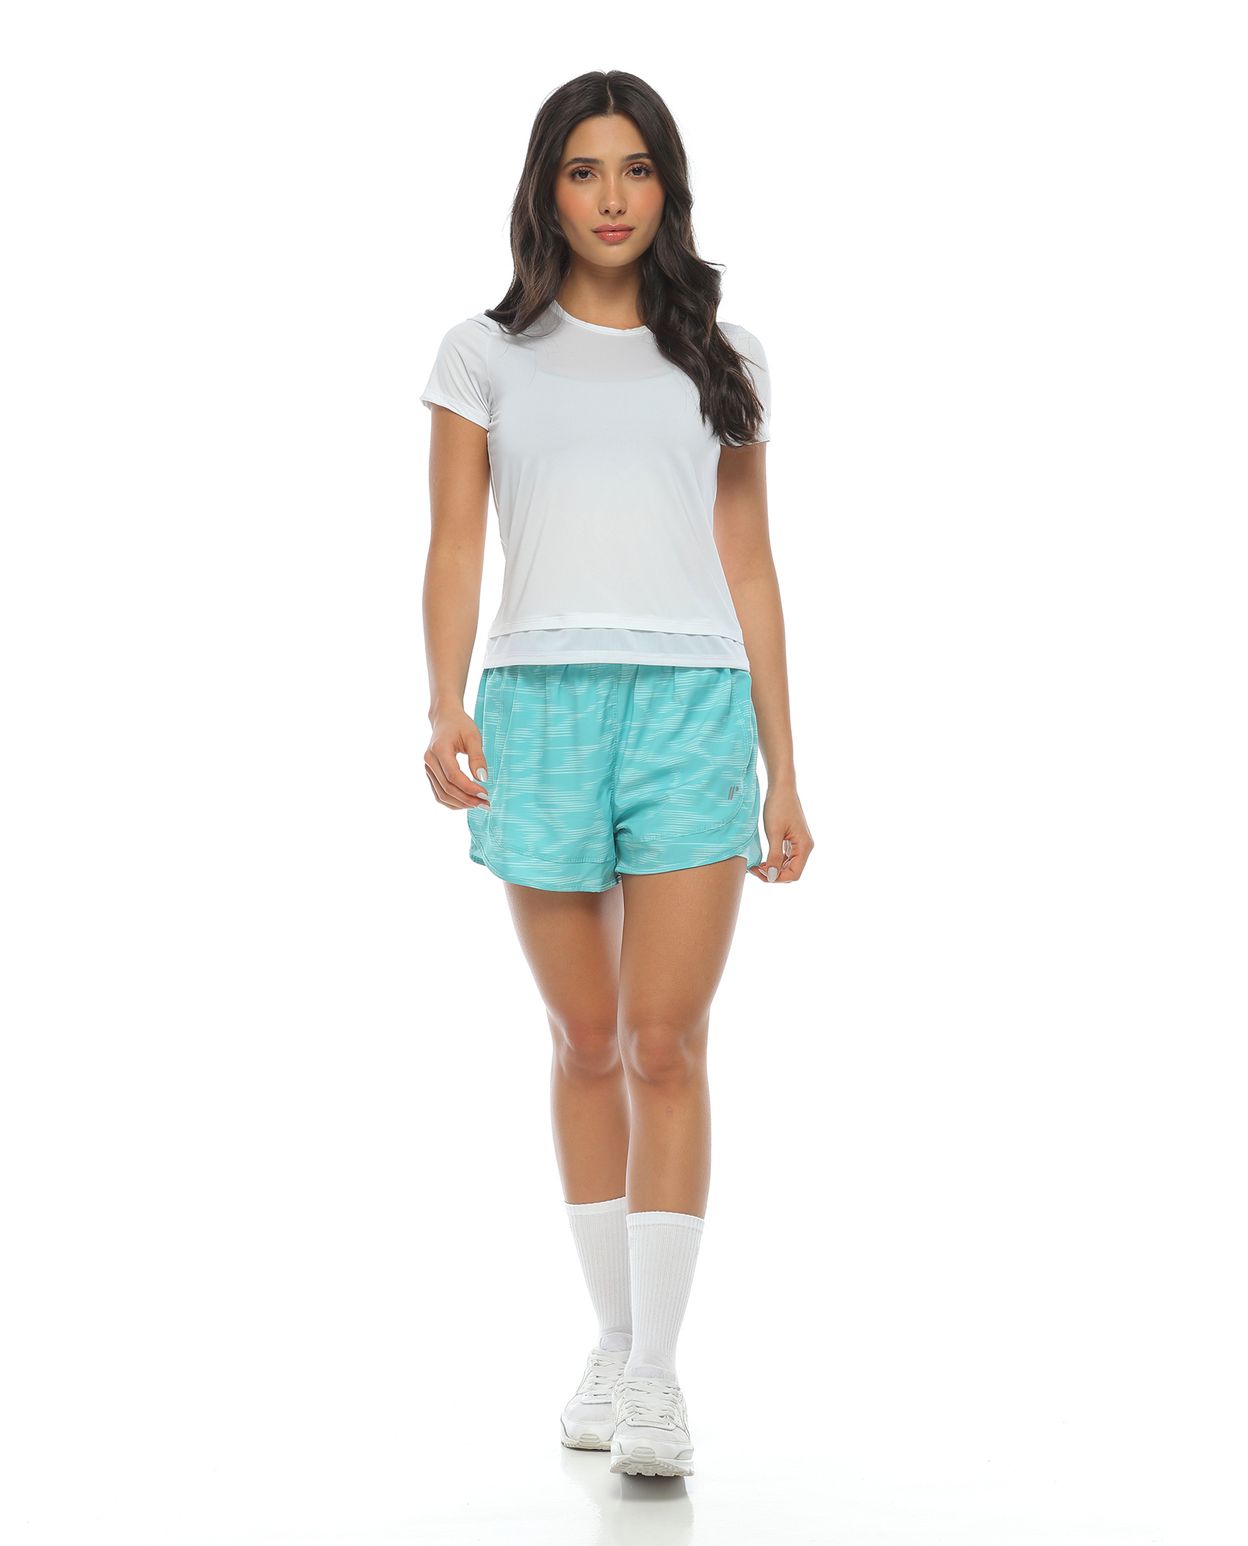 Camiseta deportiva mujer, color blanco, manga corta - racketball movil